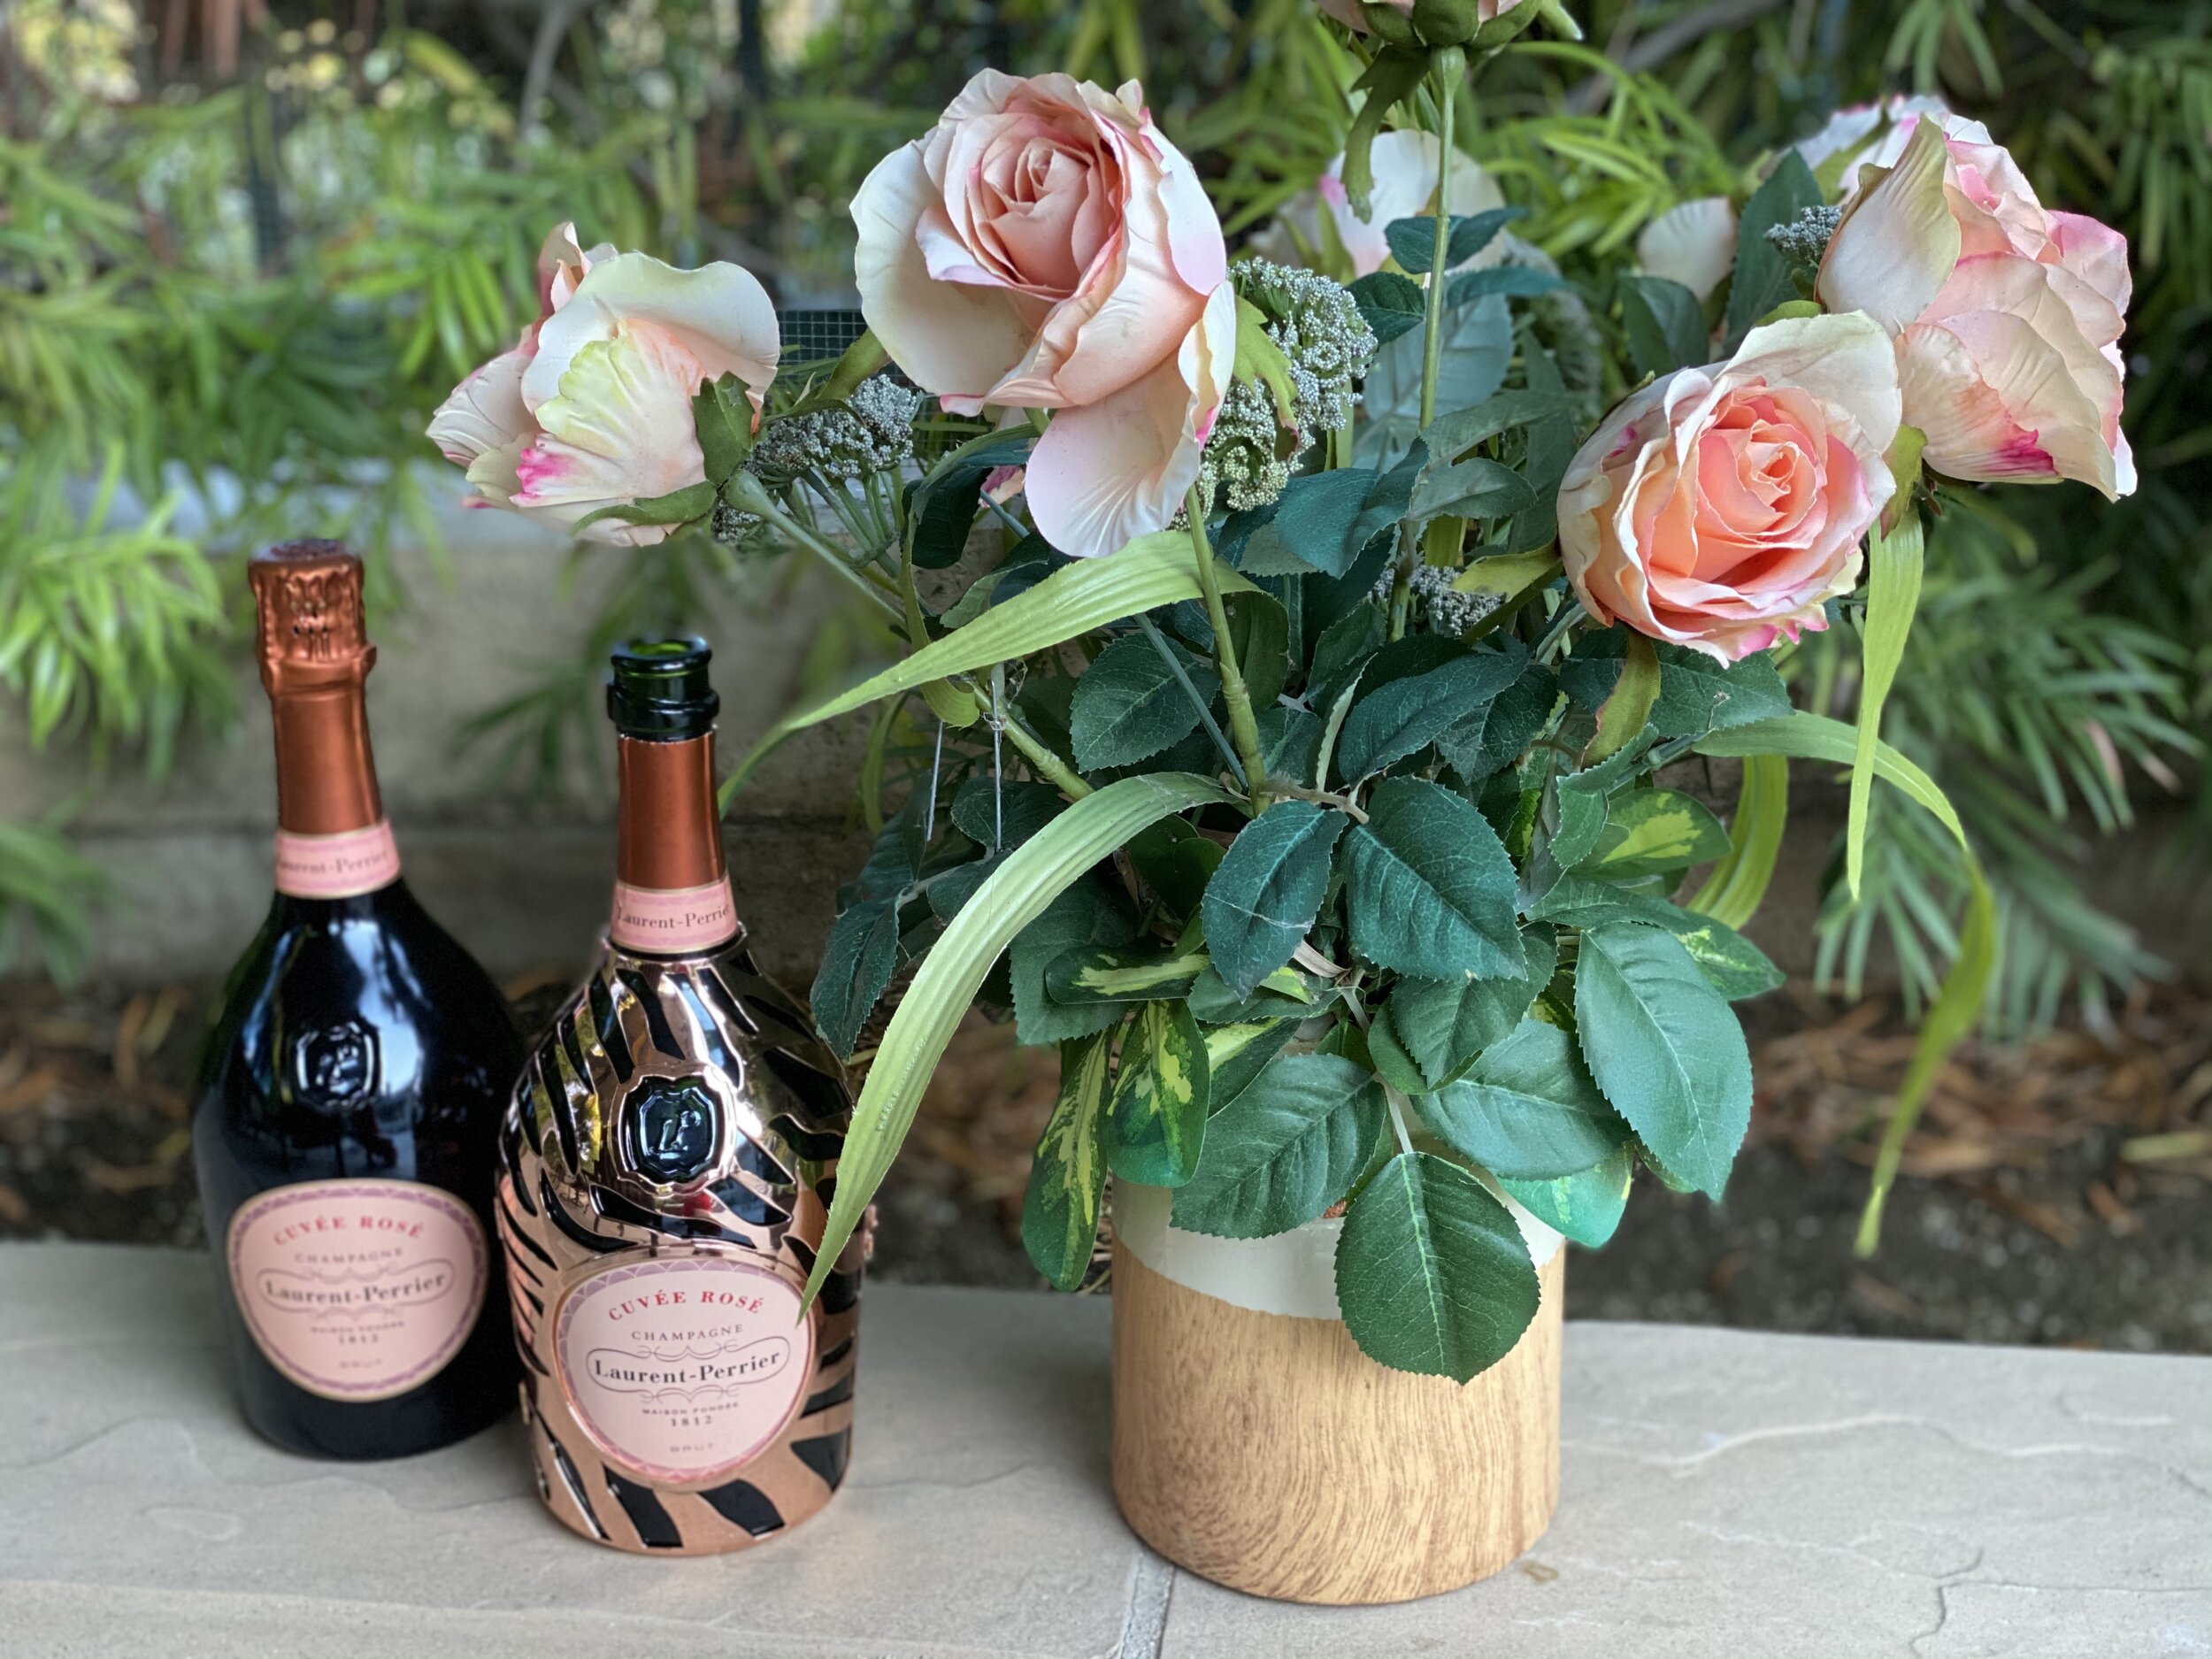 Top Rose Champagne Summer 2020 - Laurent Perrier